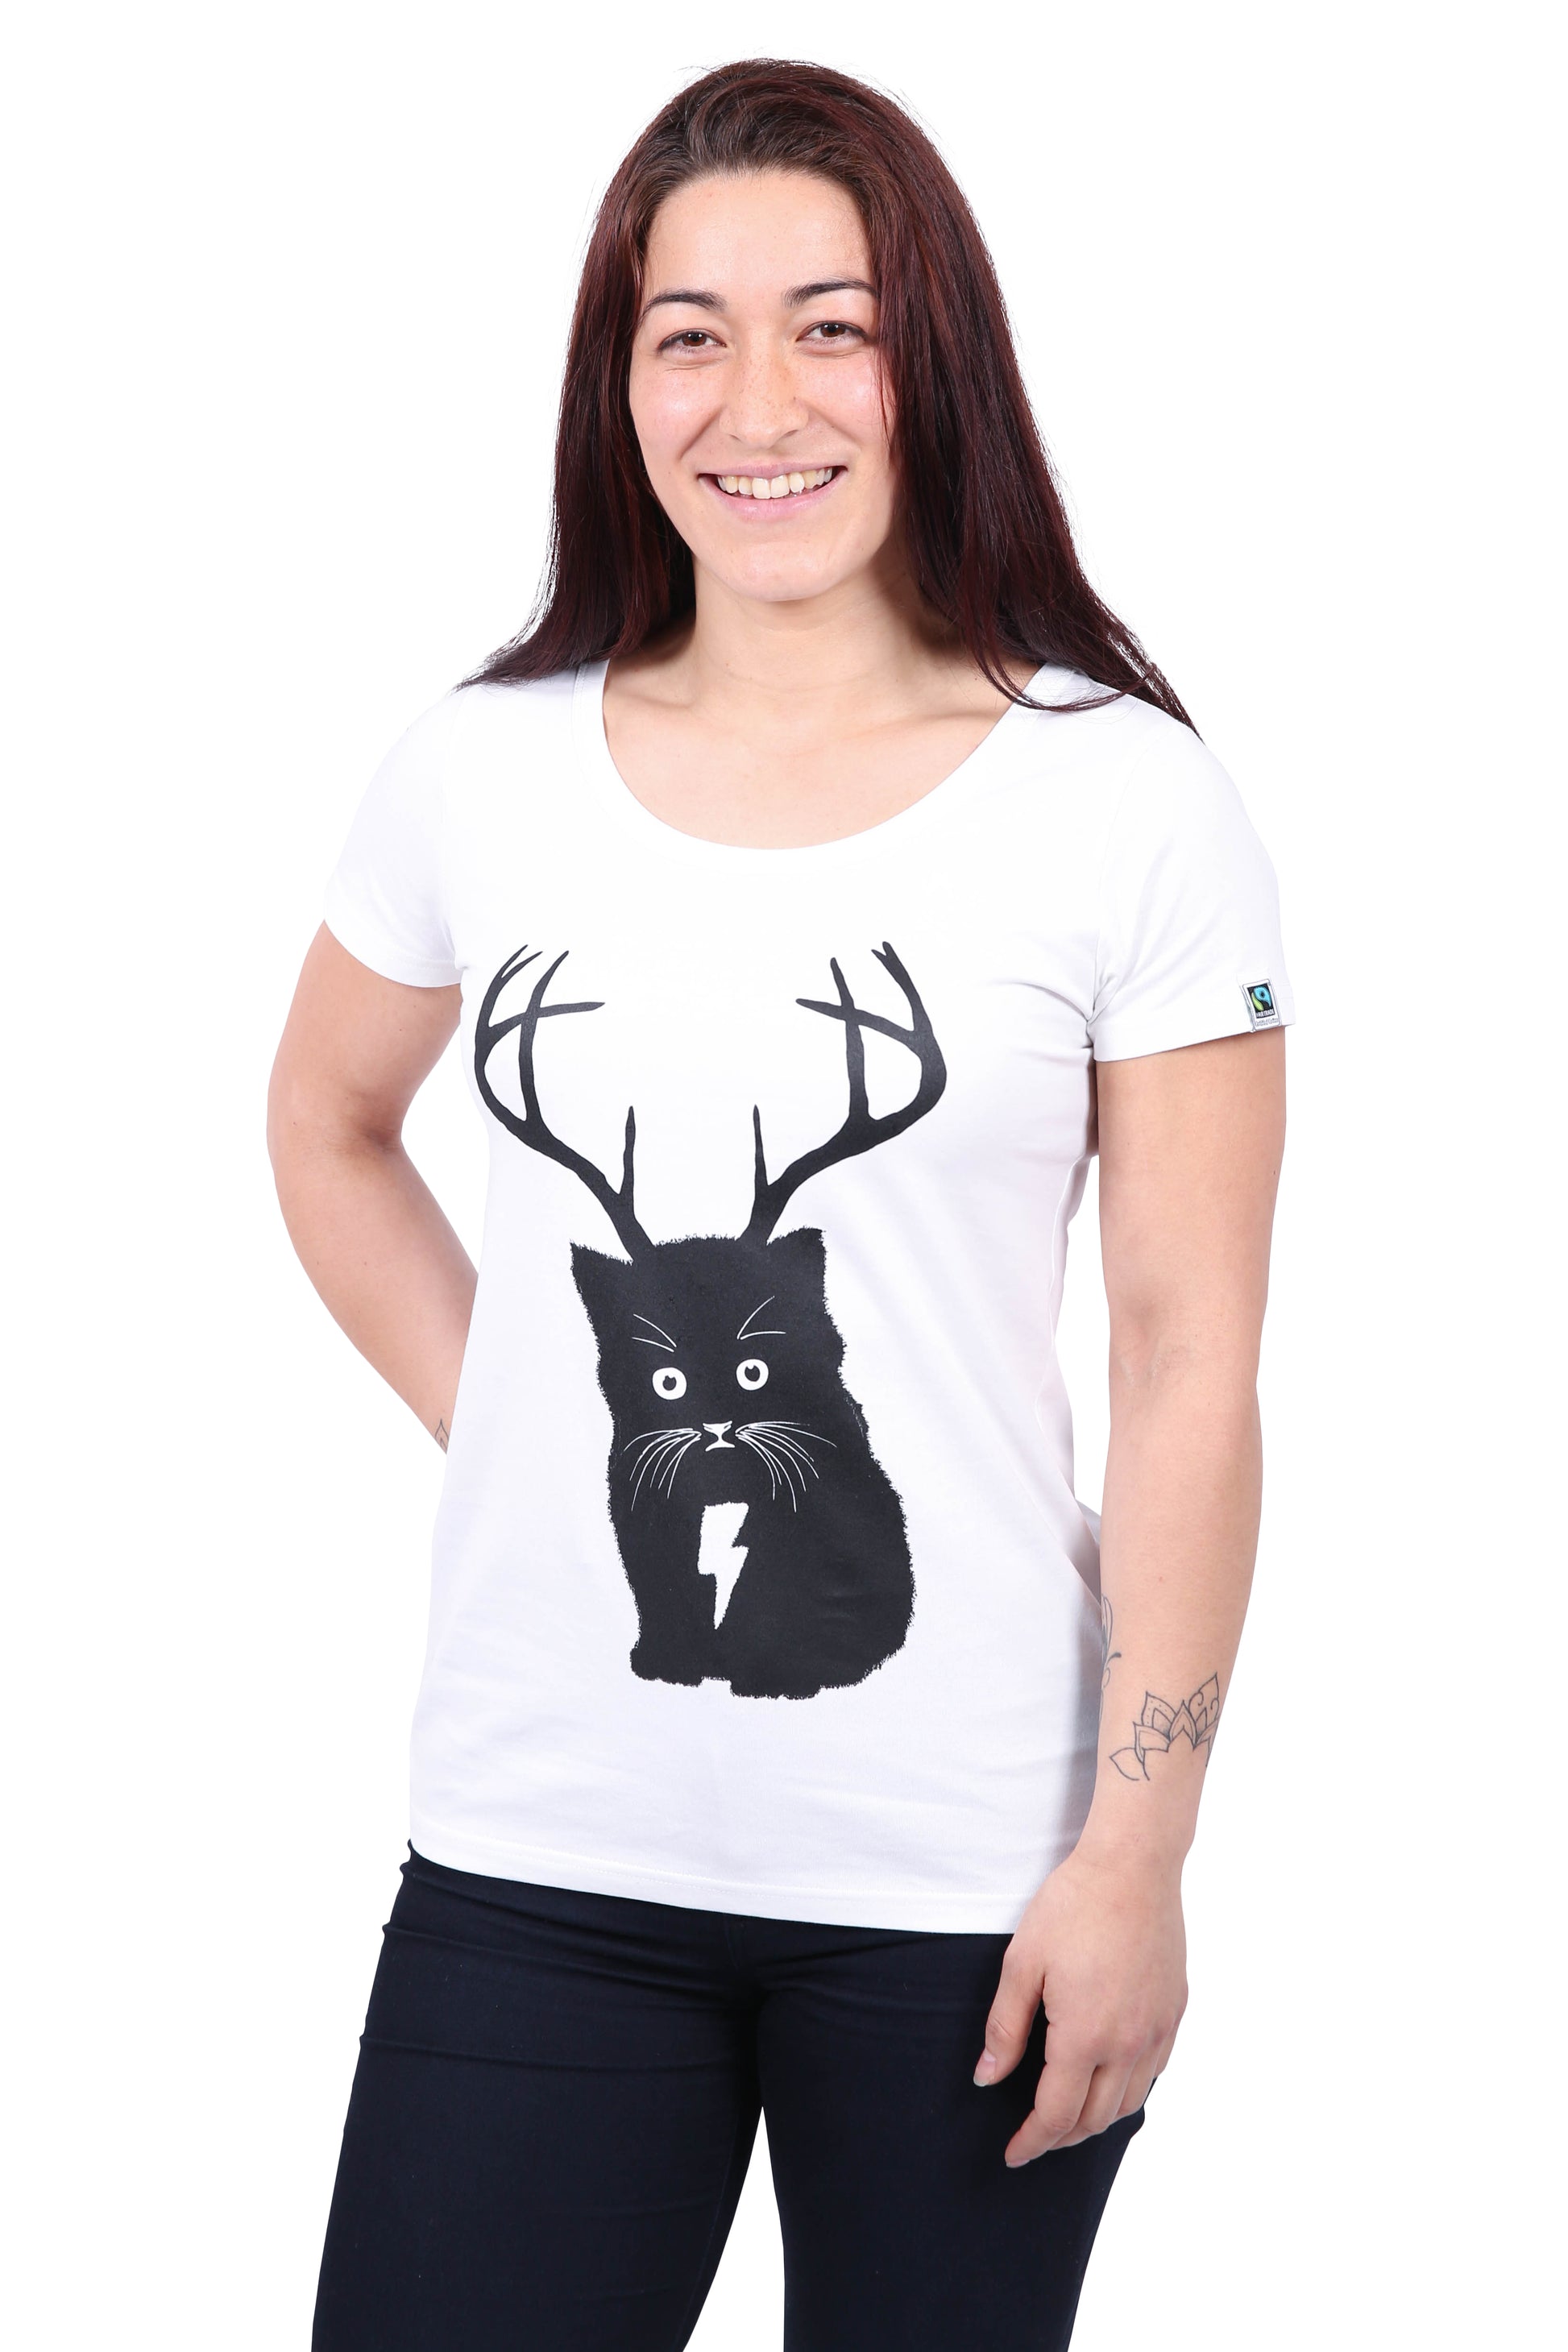 Etiko Fairtrade Certified Organic Cotton Cat Printed White Womens T-Shirt